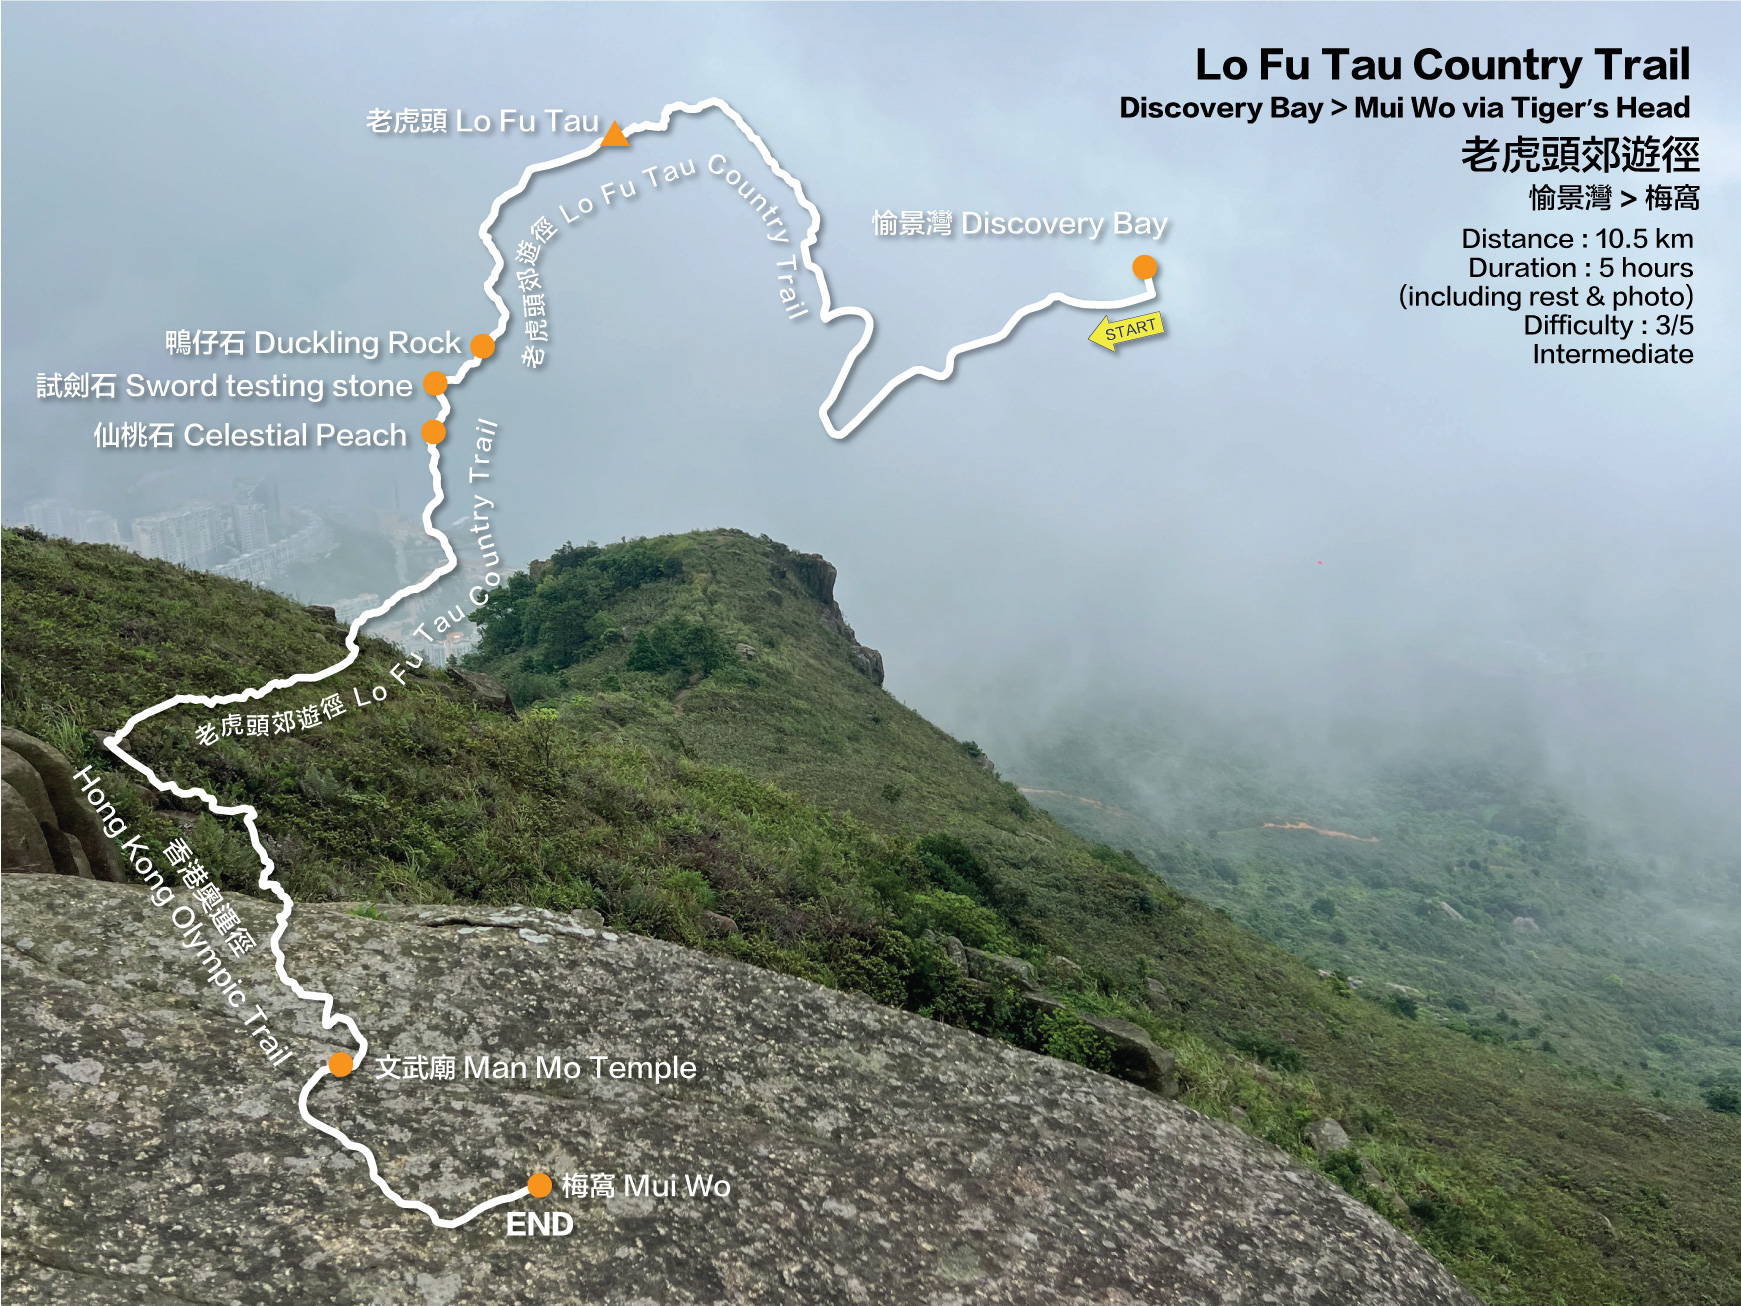 Copy of Lo Fu Tau Country Trail | Discovery Bay to Mui Wo via Tiger’s Head